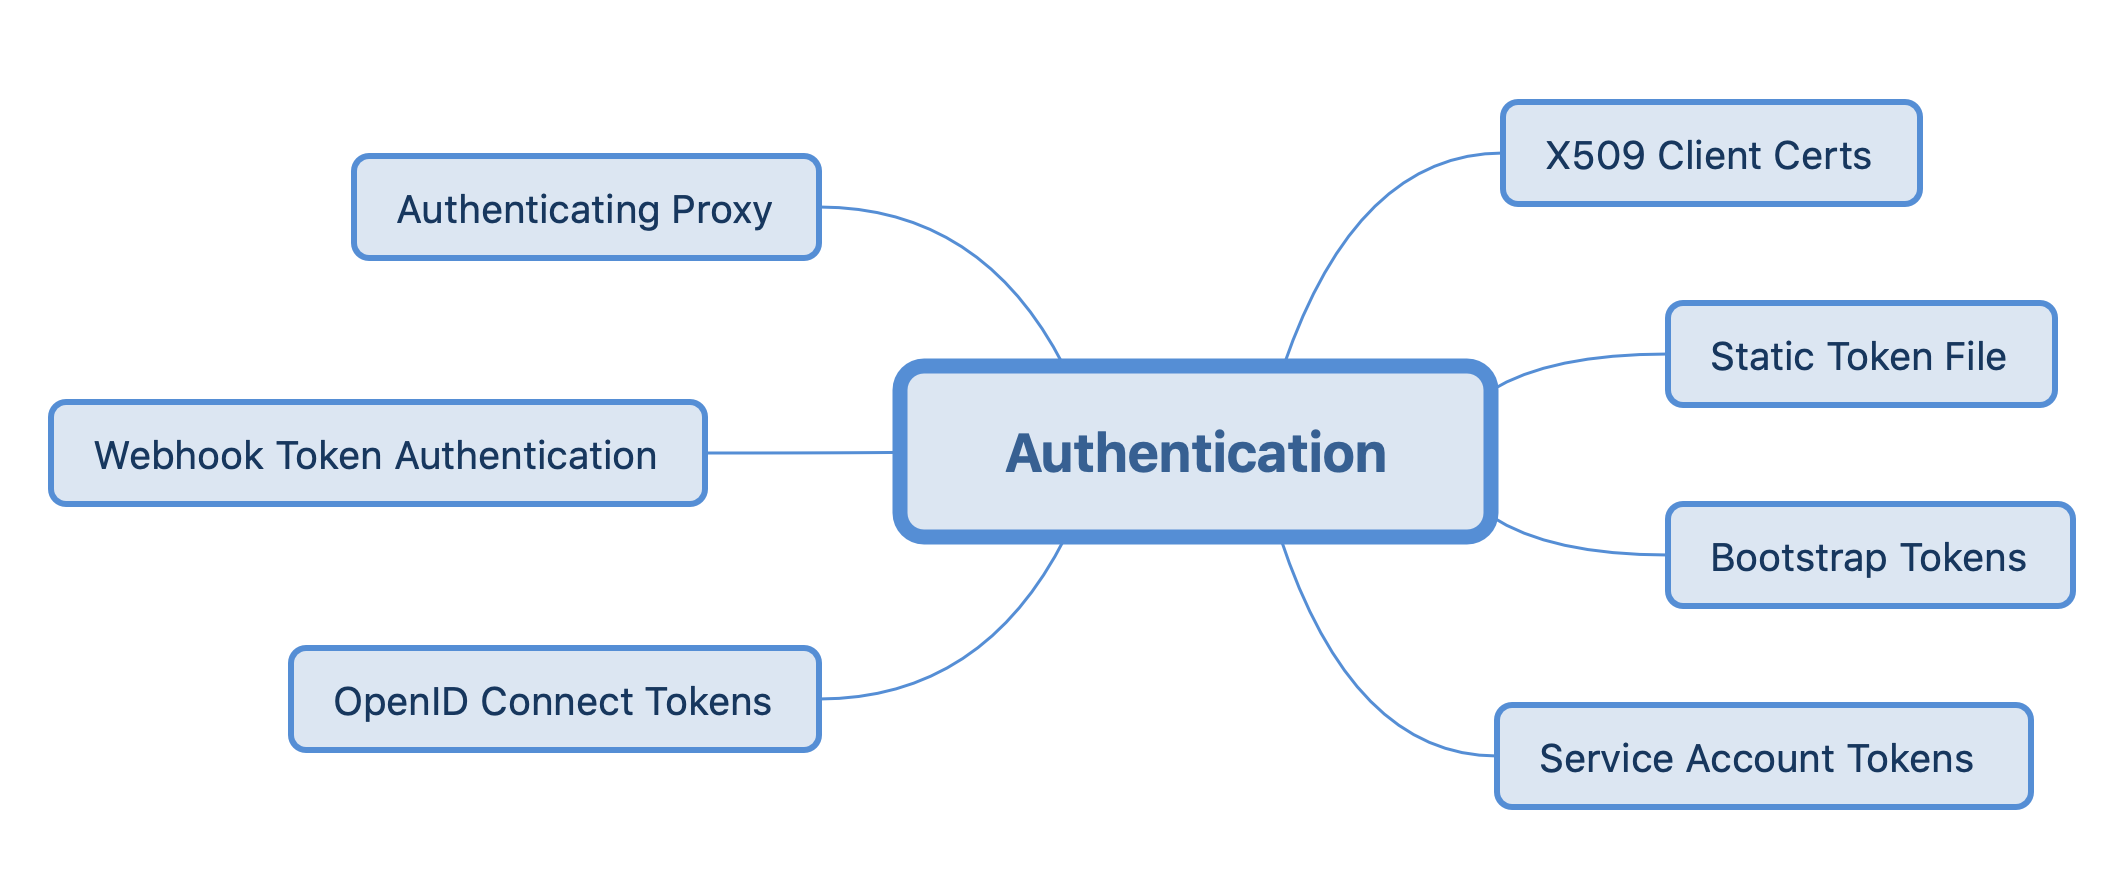 APIServer itself supports multiple authentication methods